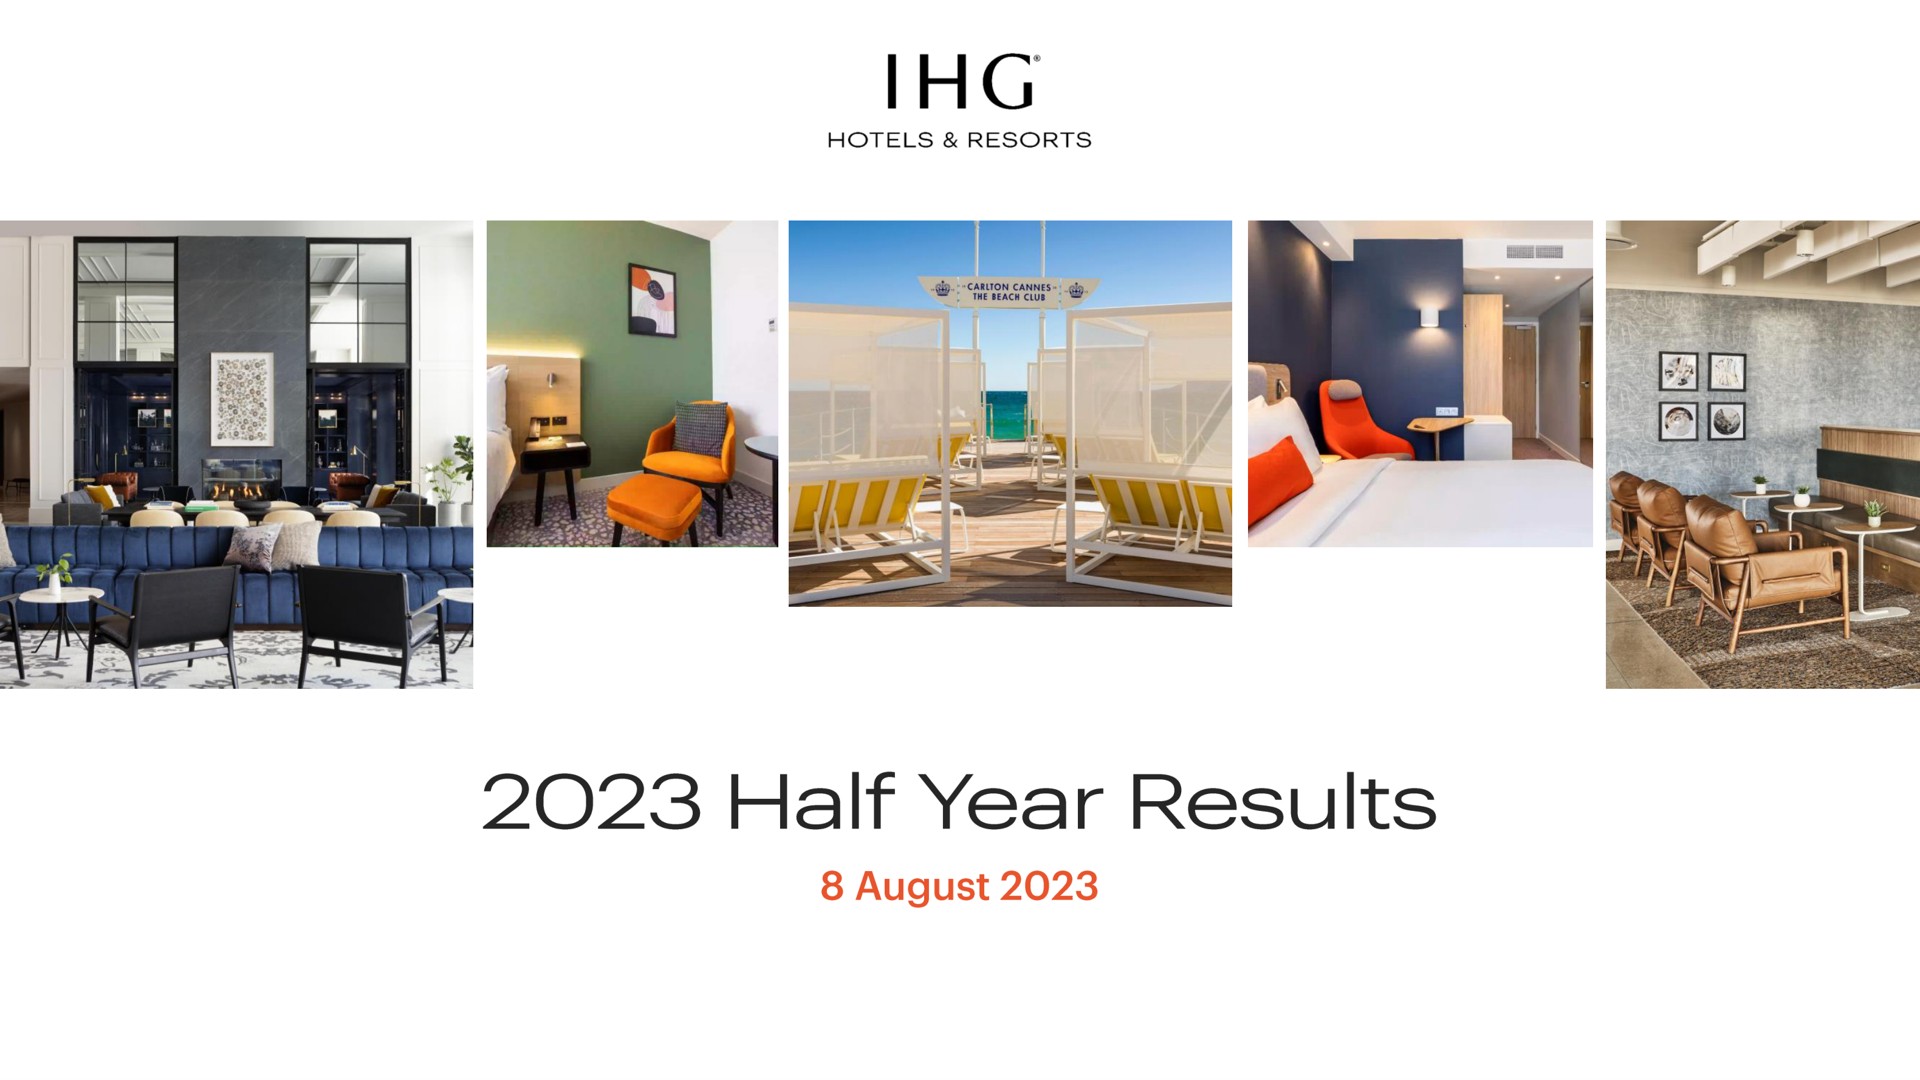 half year results | IHG Hotels